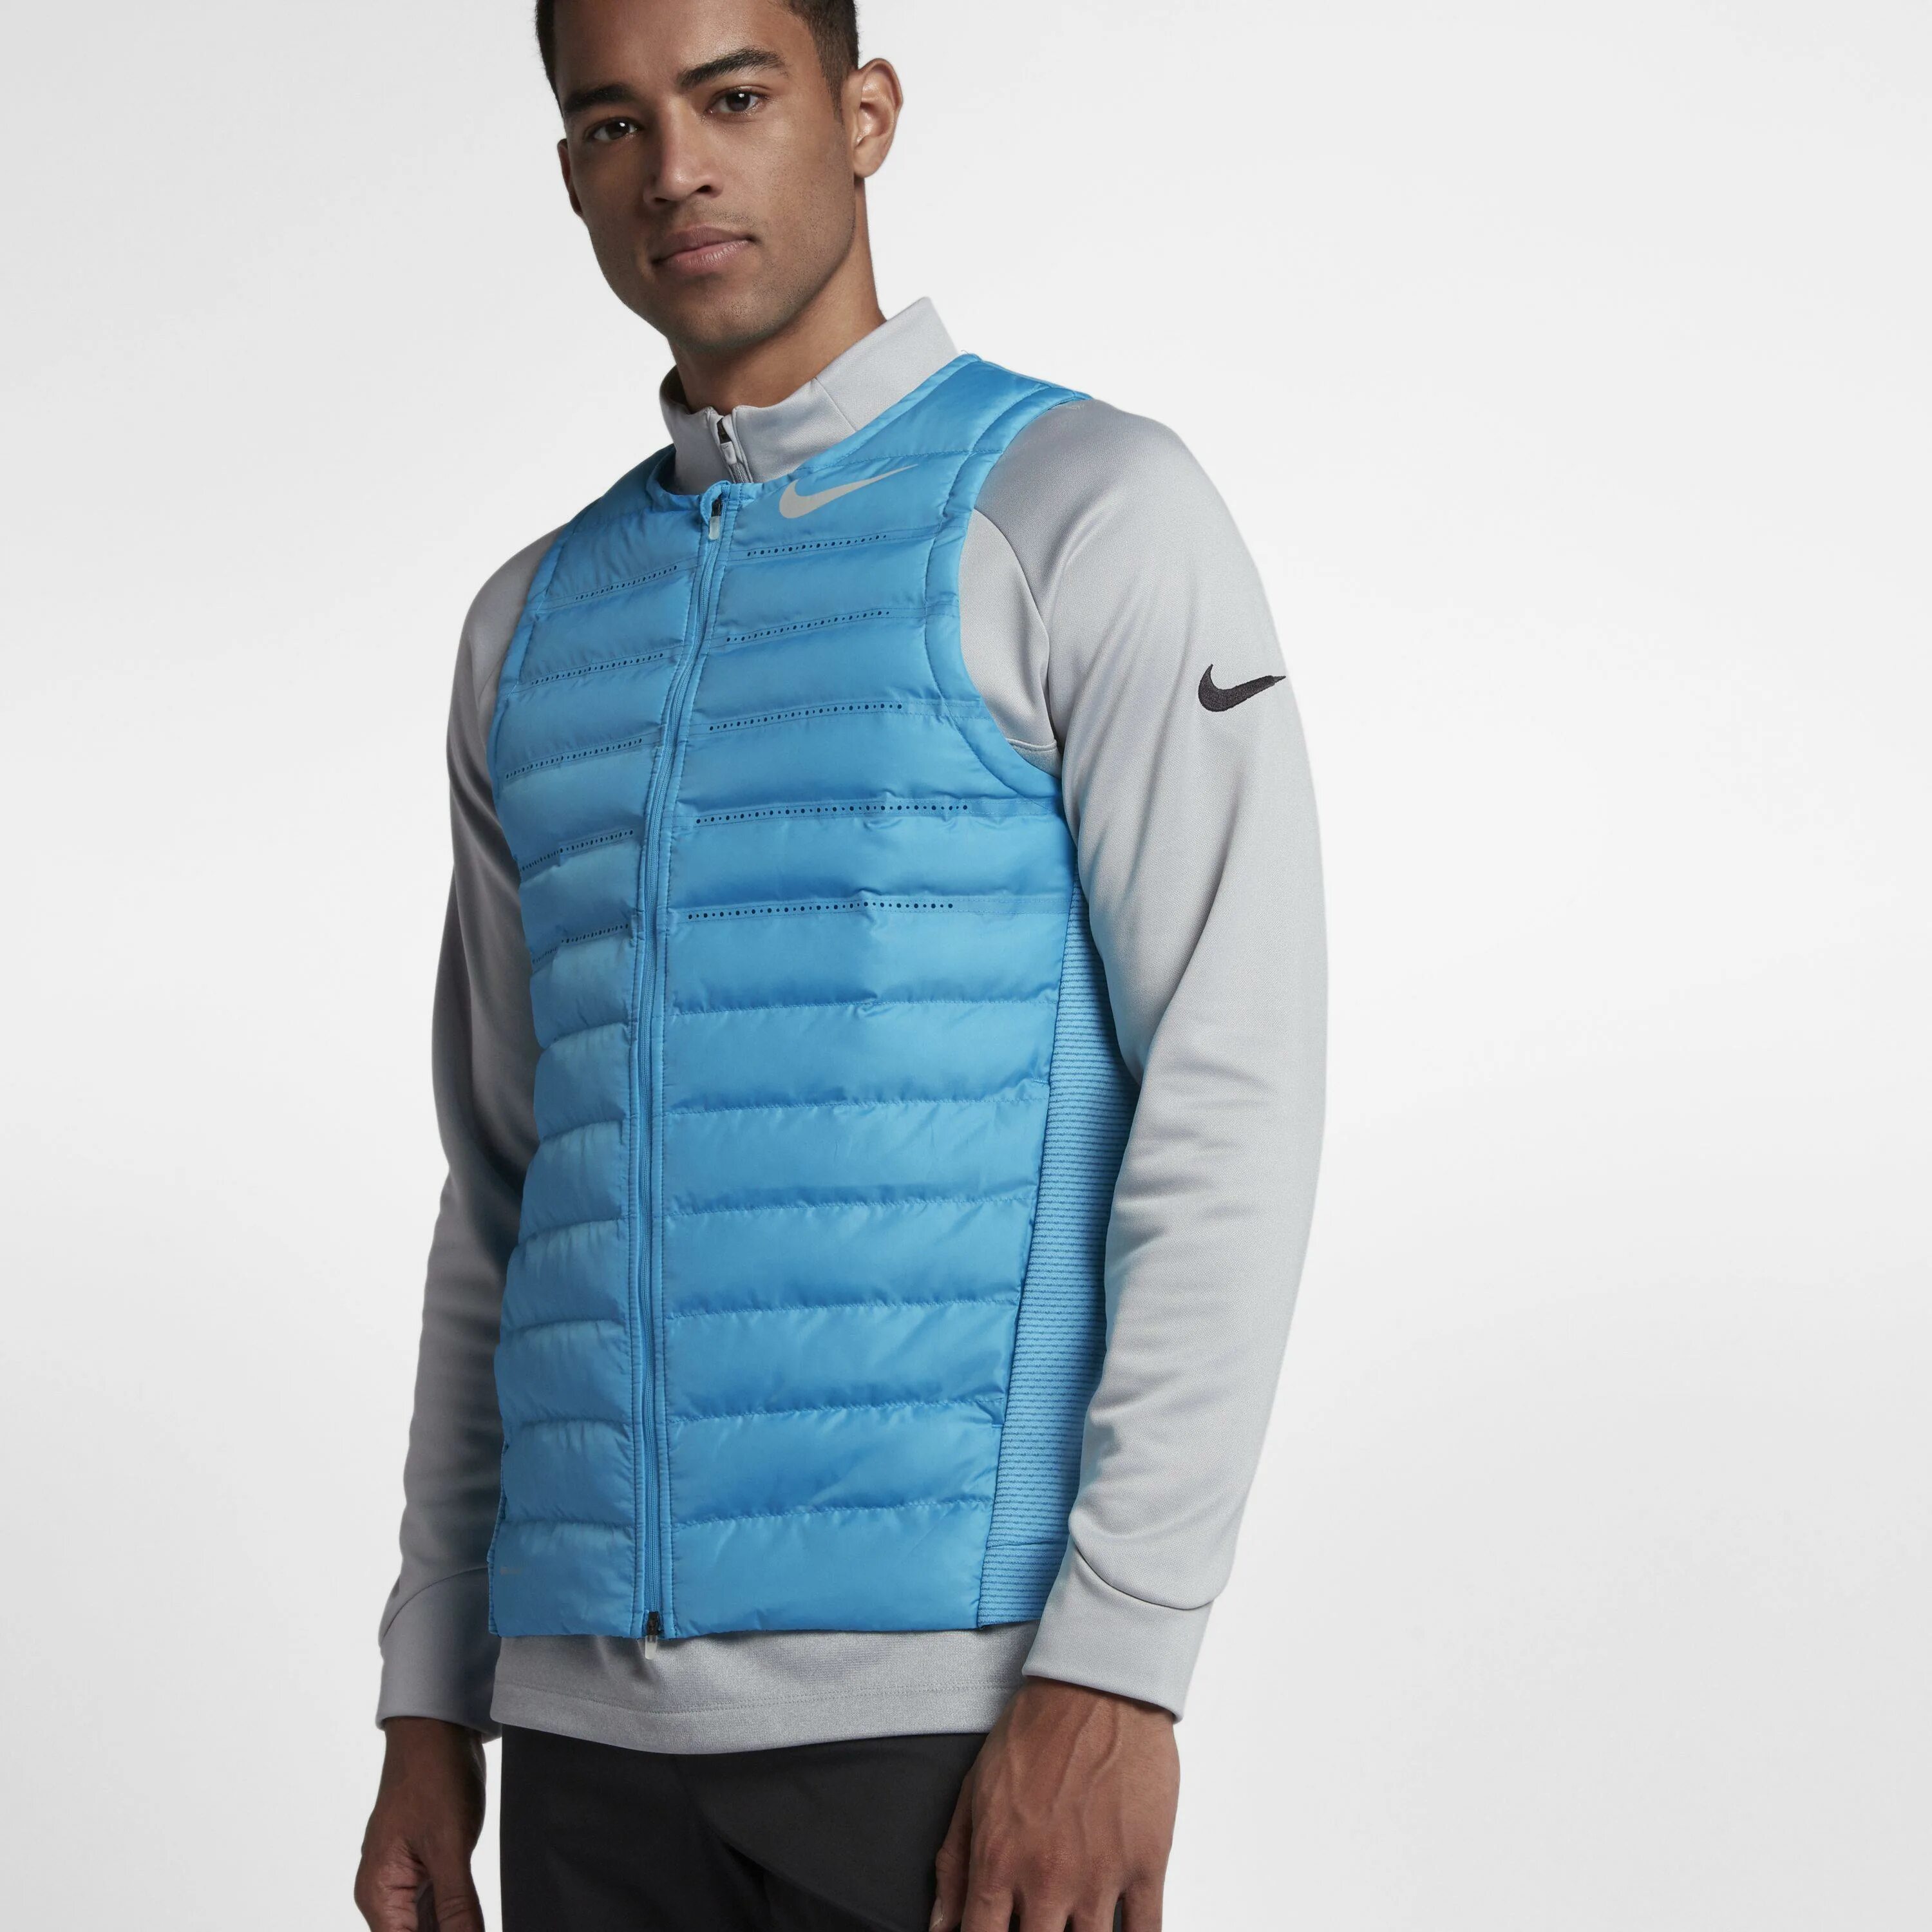 Жилет Nike Aeroloft. Жилет Nike Running Aeroloft. Nike Aeroloft Vest голубая. Жилет Nike Therma-Fit Tech Pack. Найк жилет